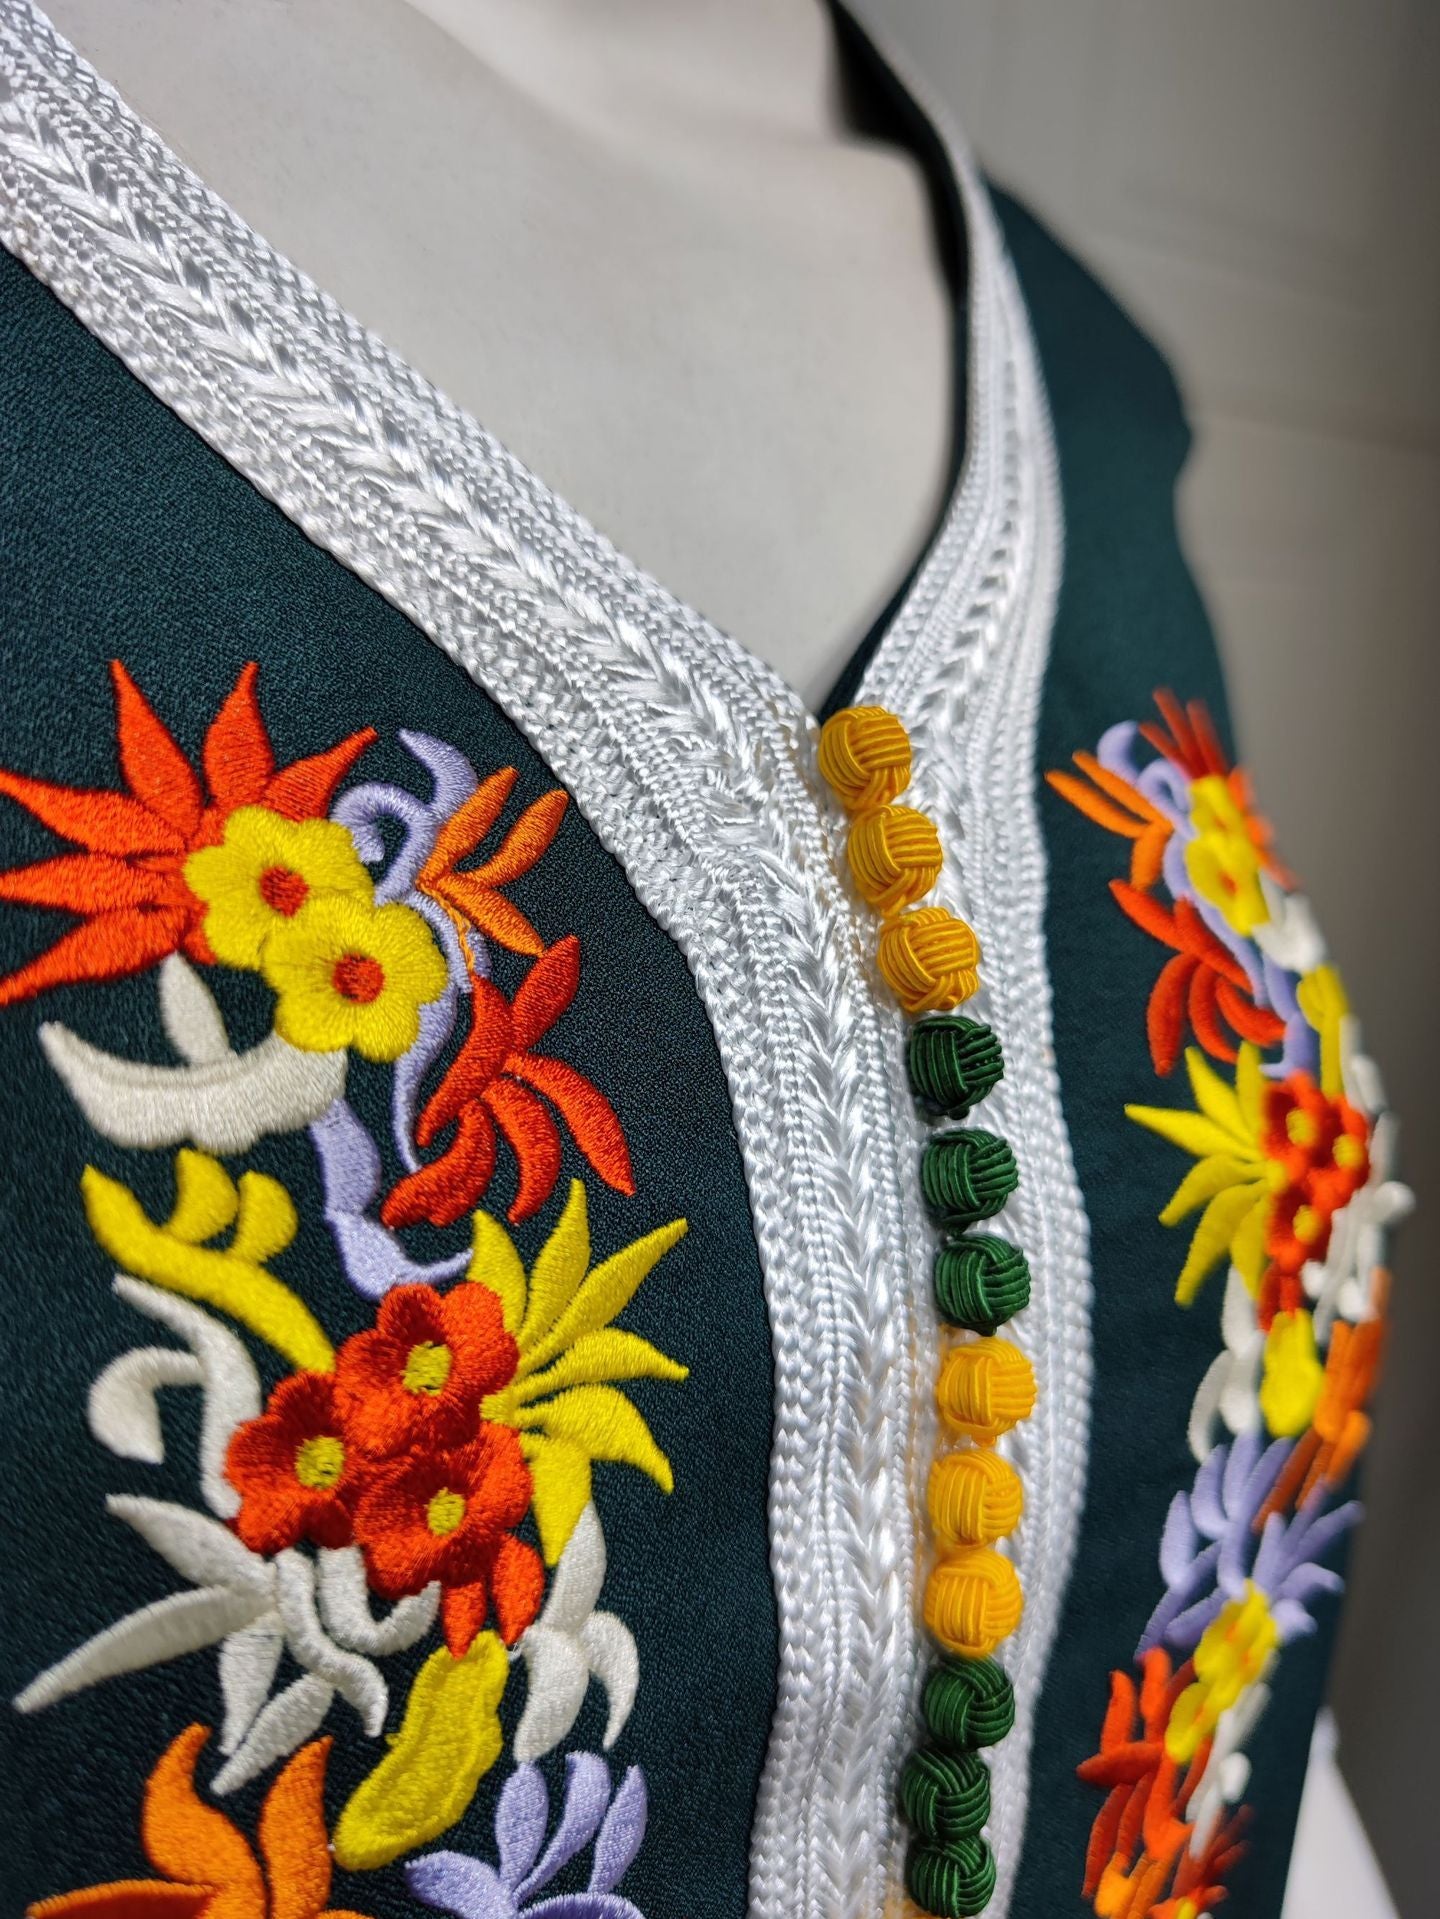 Four Seasons Embroidered Lace Chiffon Dubai Robe